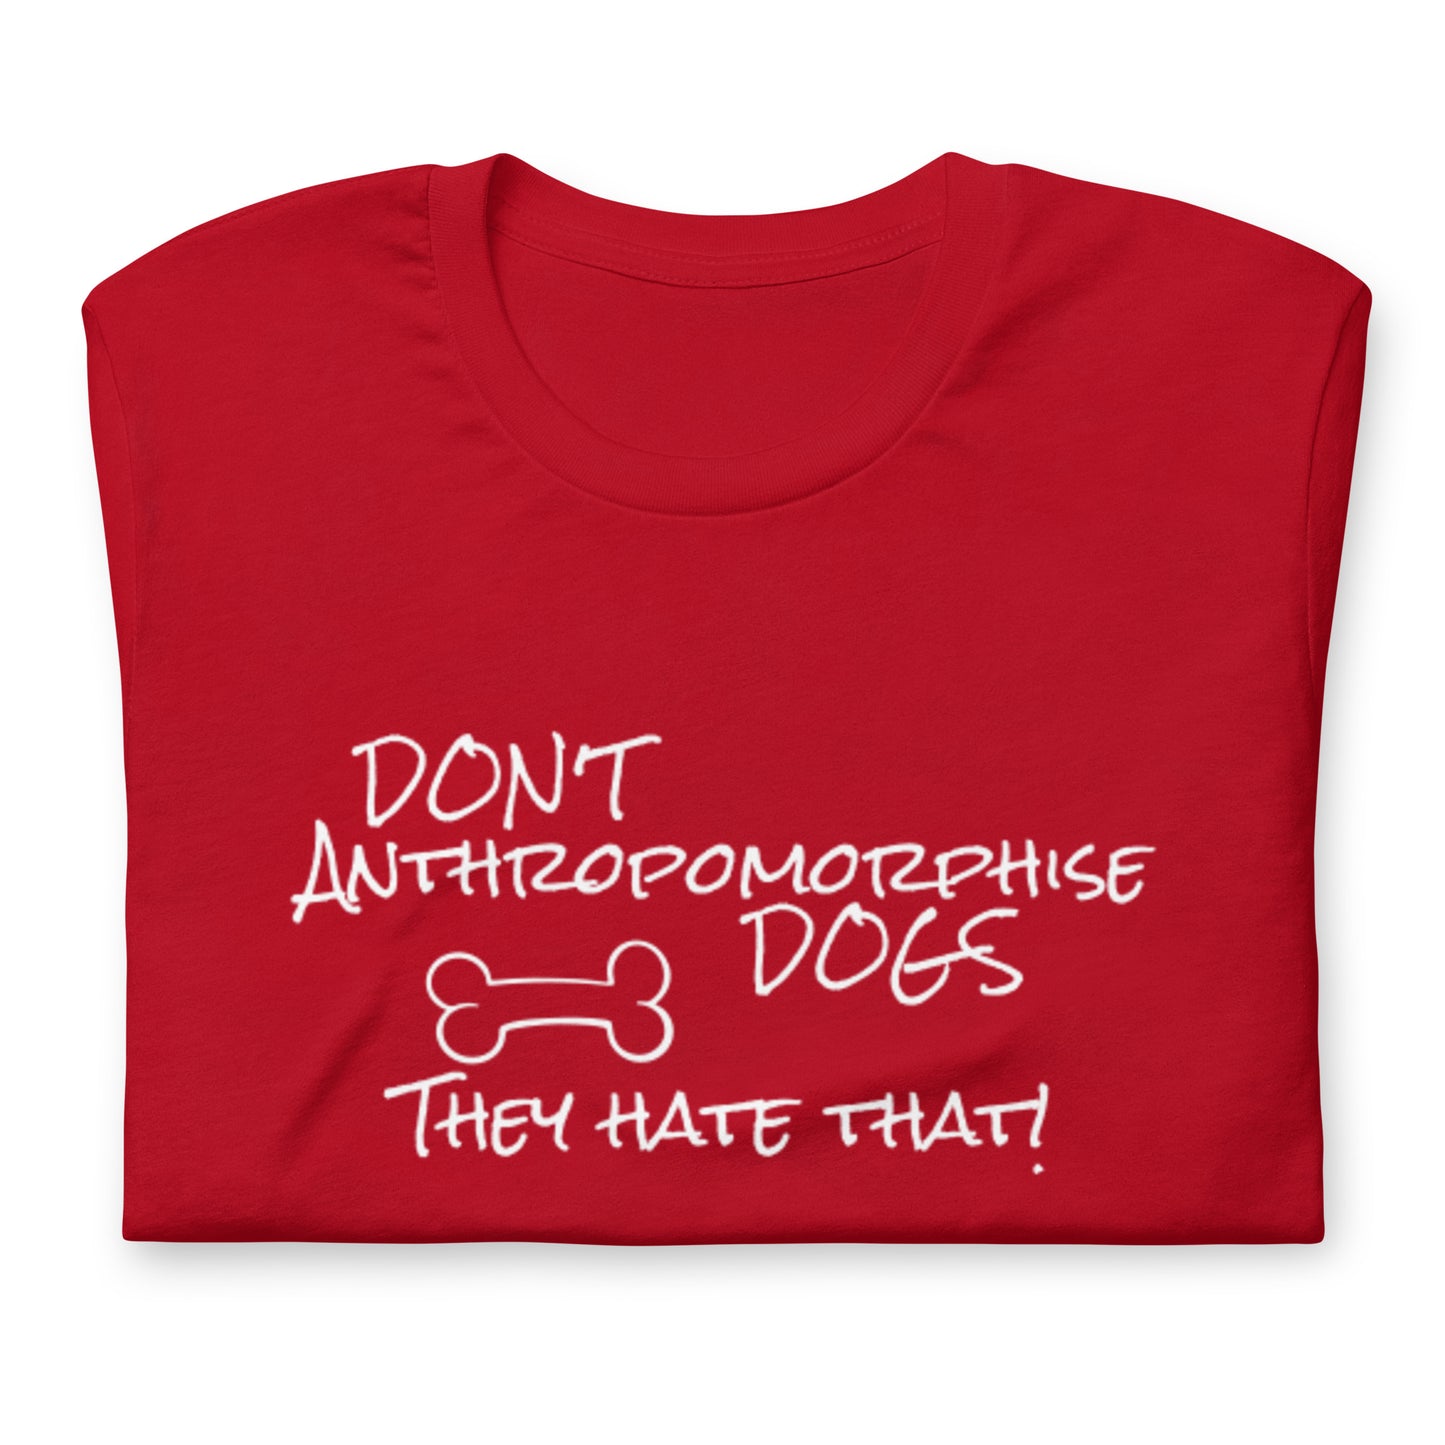 Don't anthropormorphise dogs